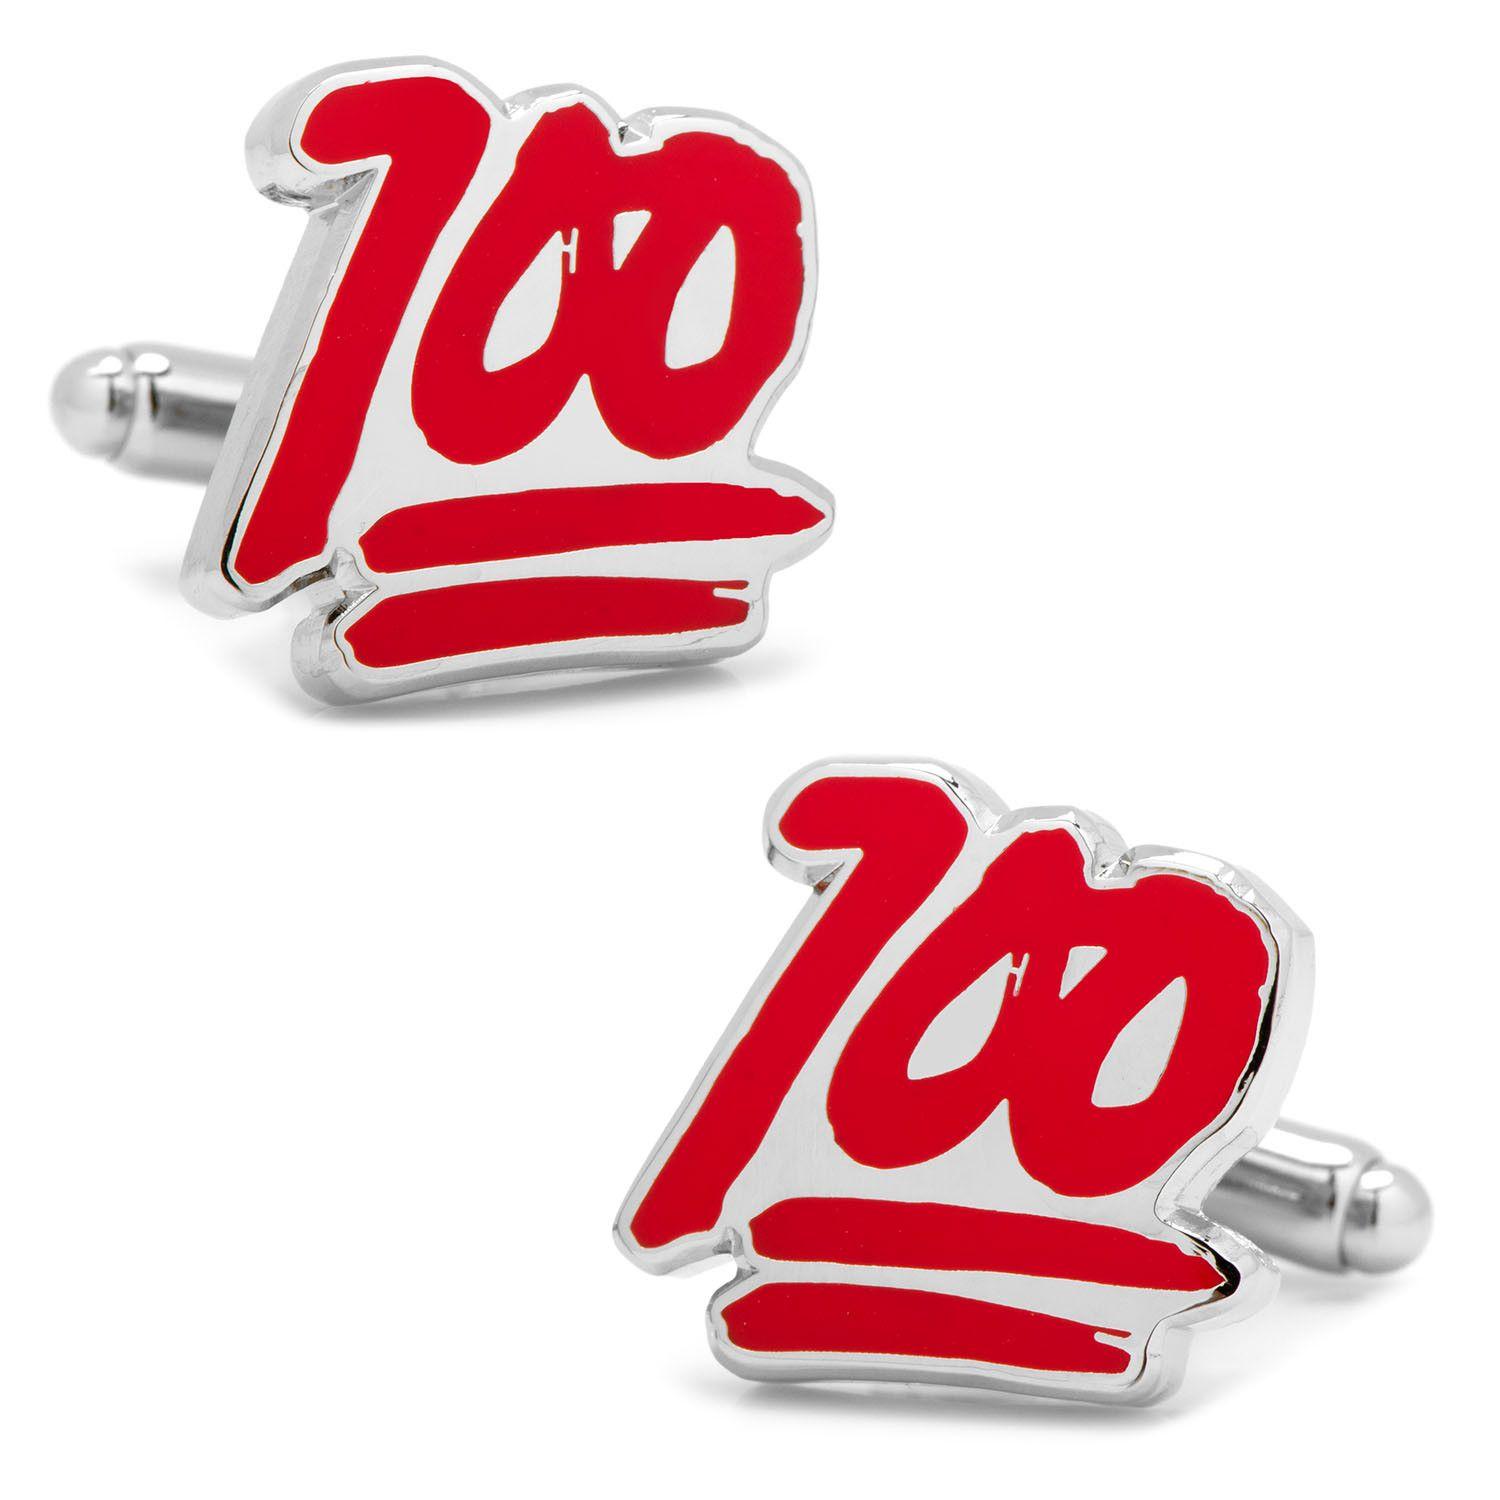 100 Emoji Logo - 100% Emoji Cufflinks & Interests Cufflinks